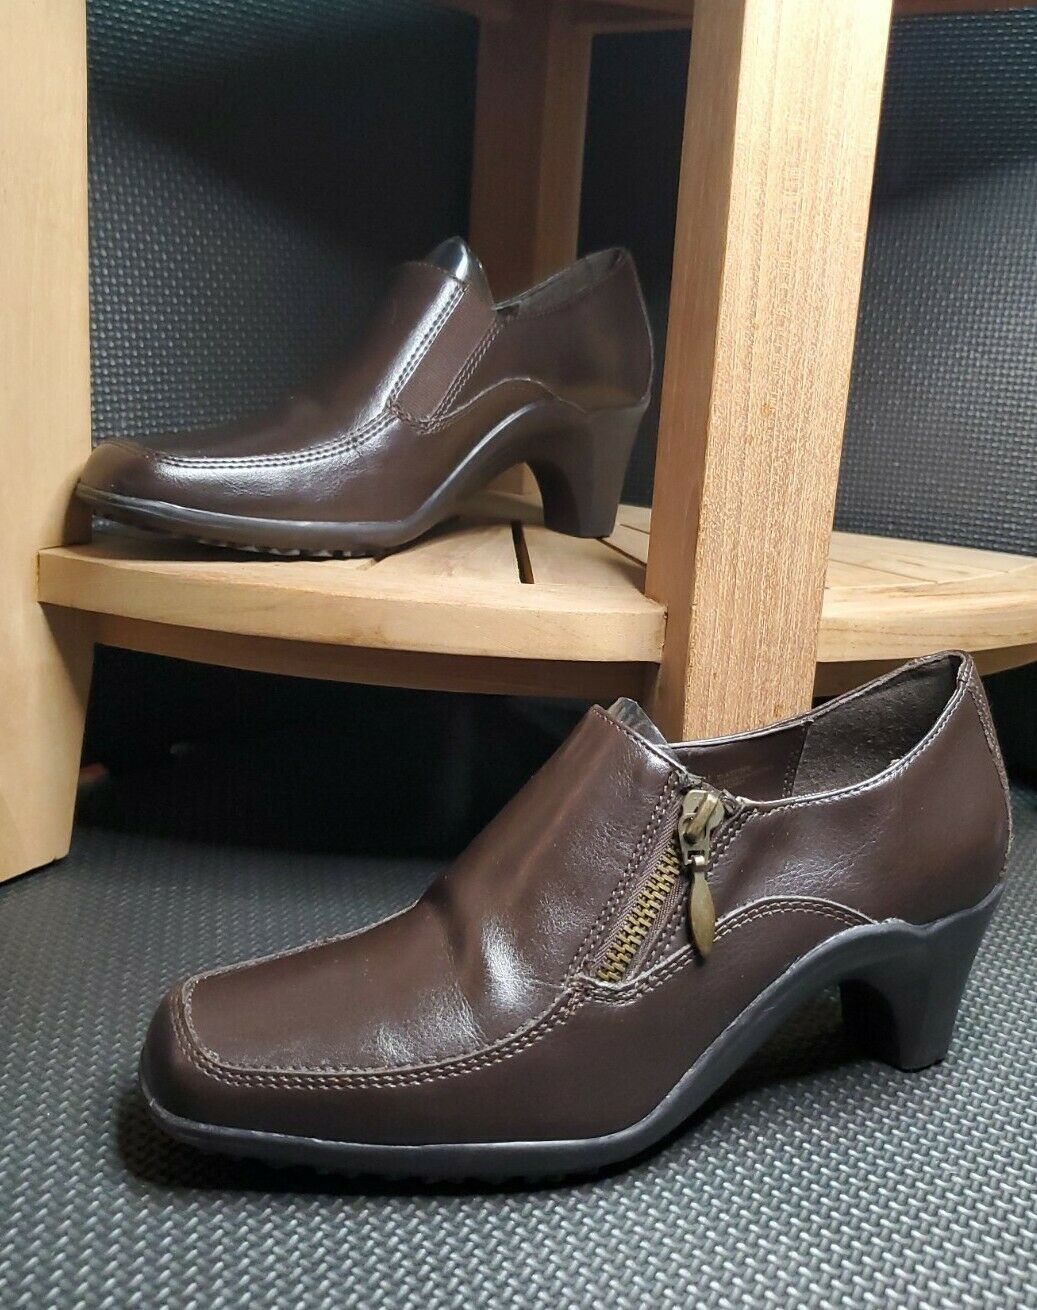 NWOT Dress Casual Leather AEROSOLES Dark Brown BLASTOFF Shoes size 7M low heel